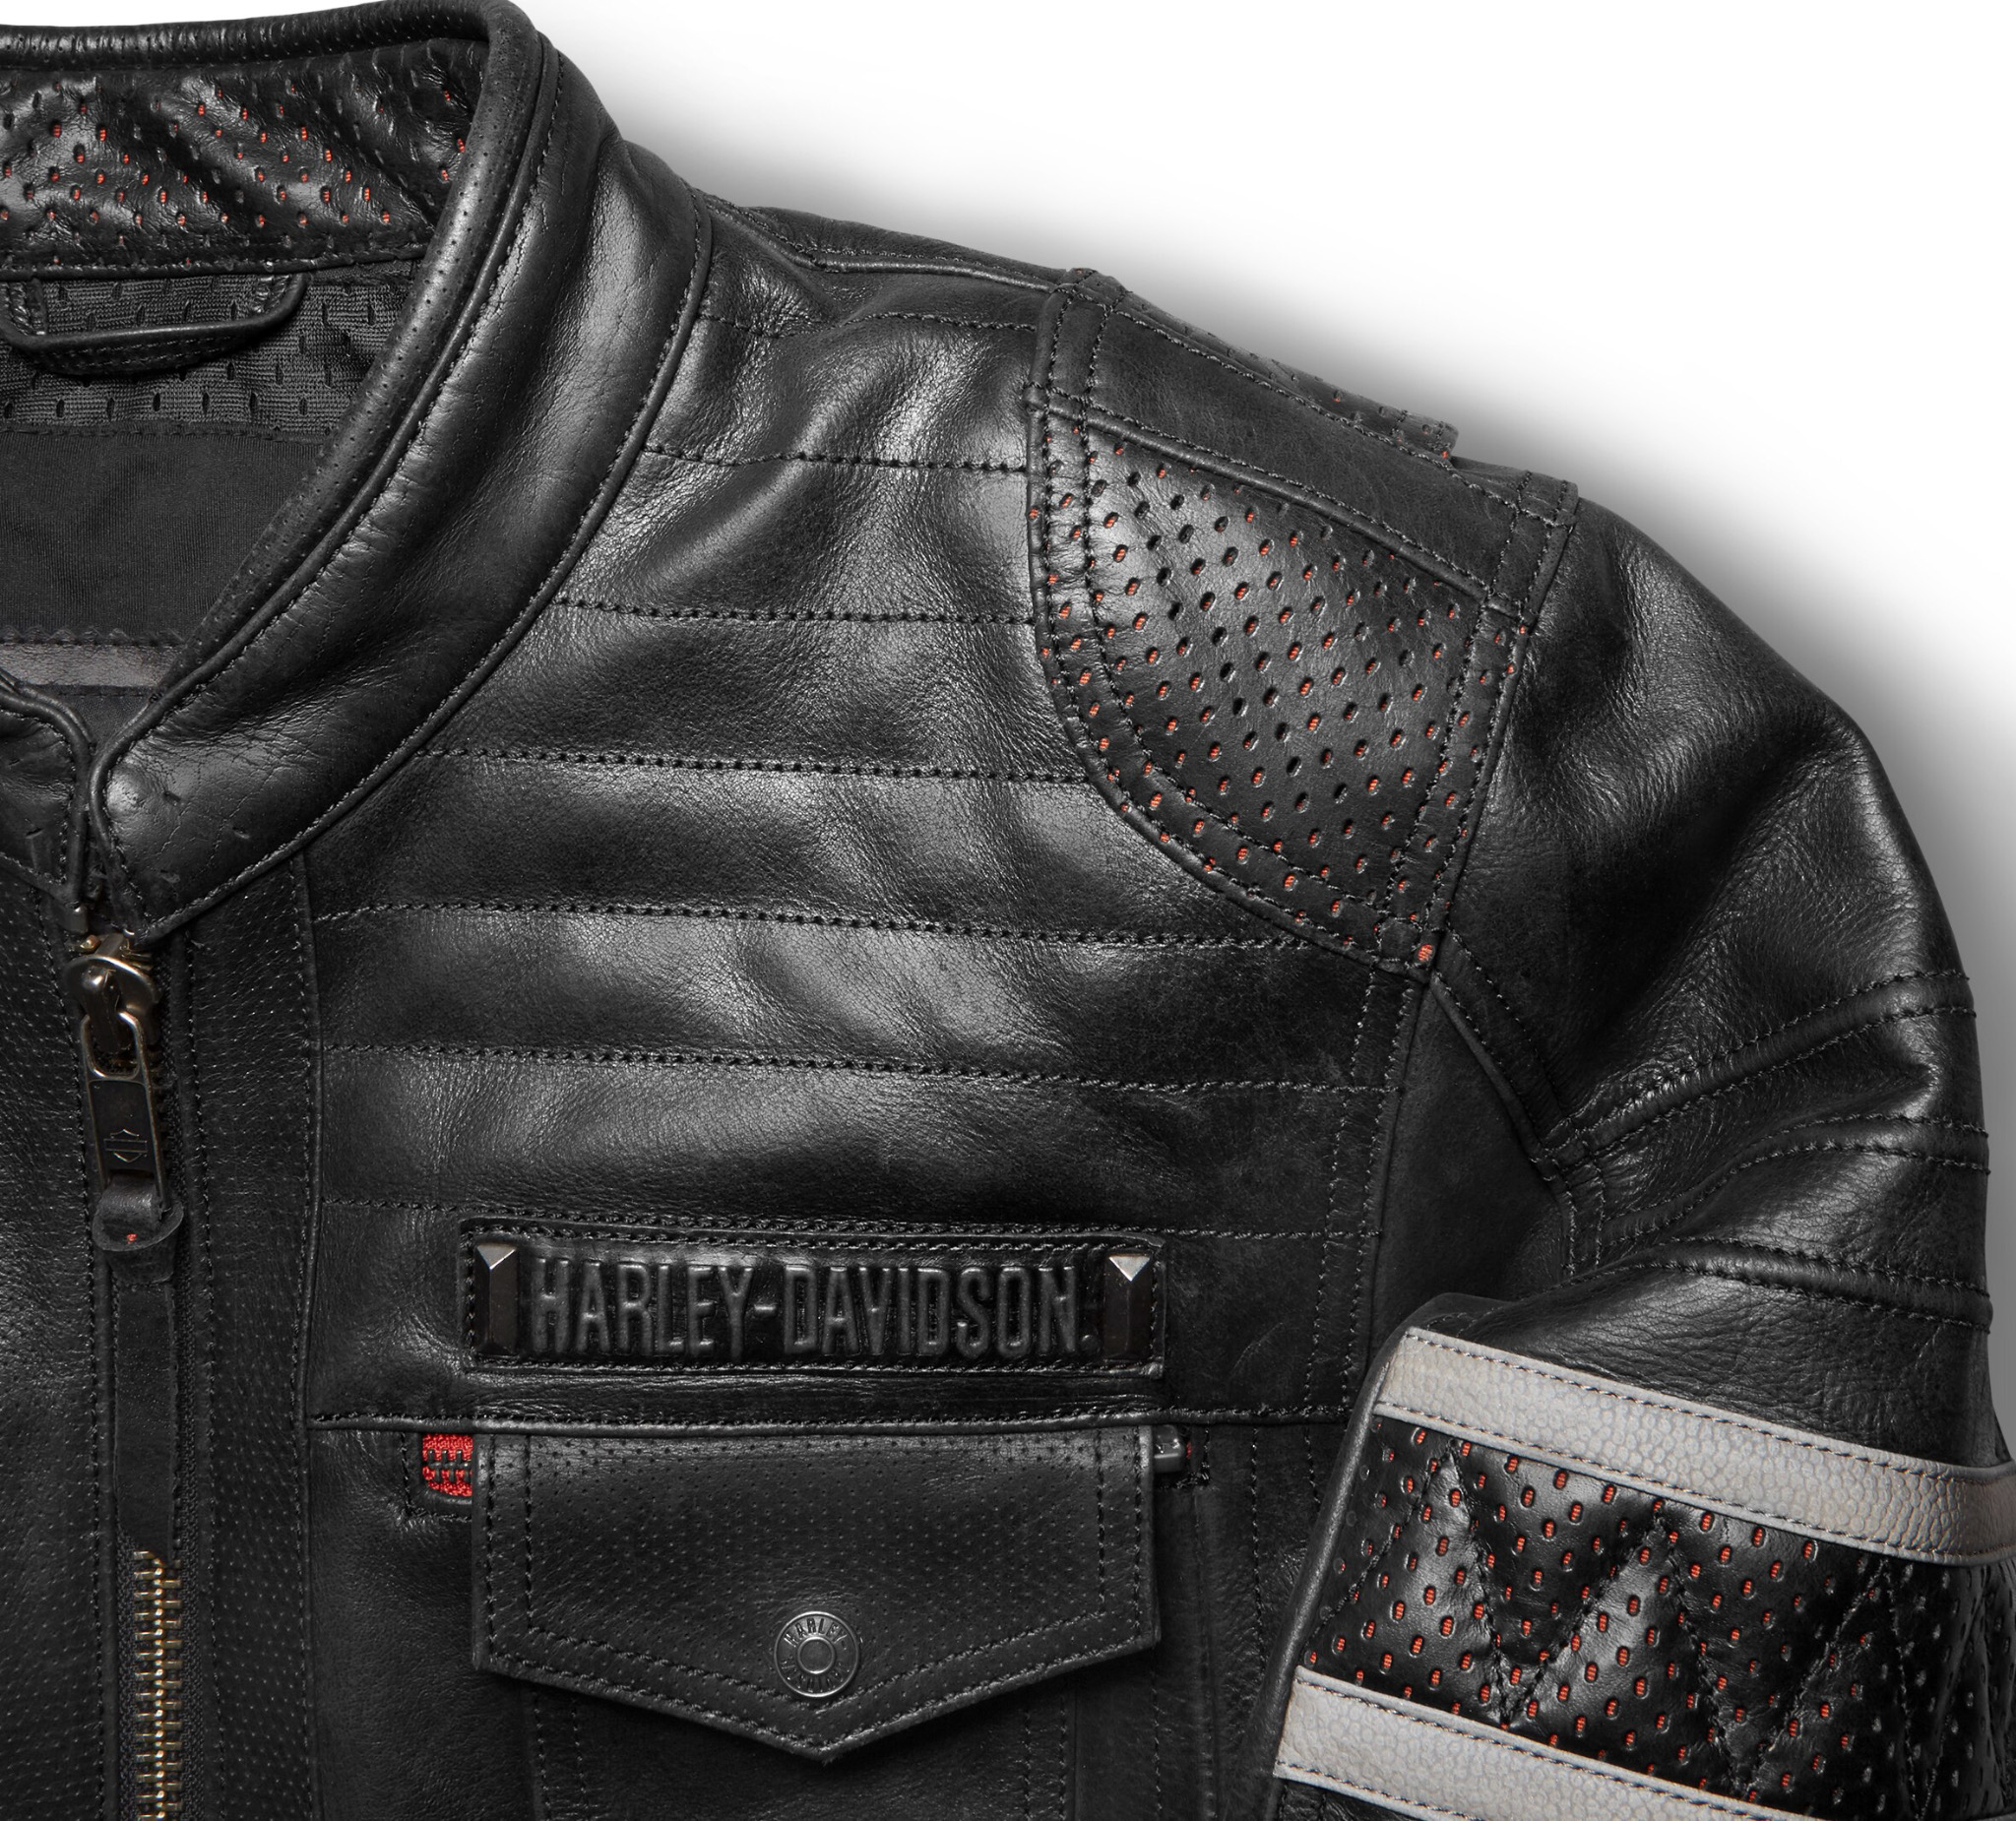 Harley Davidson Leather Jackets Mens Promotions